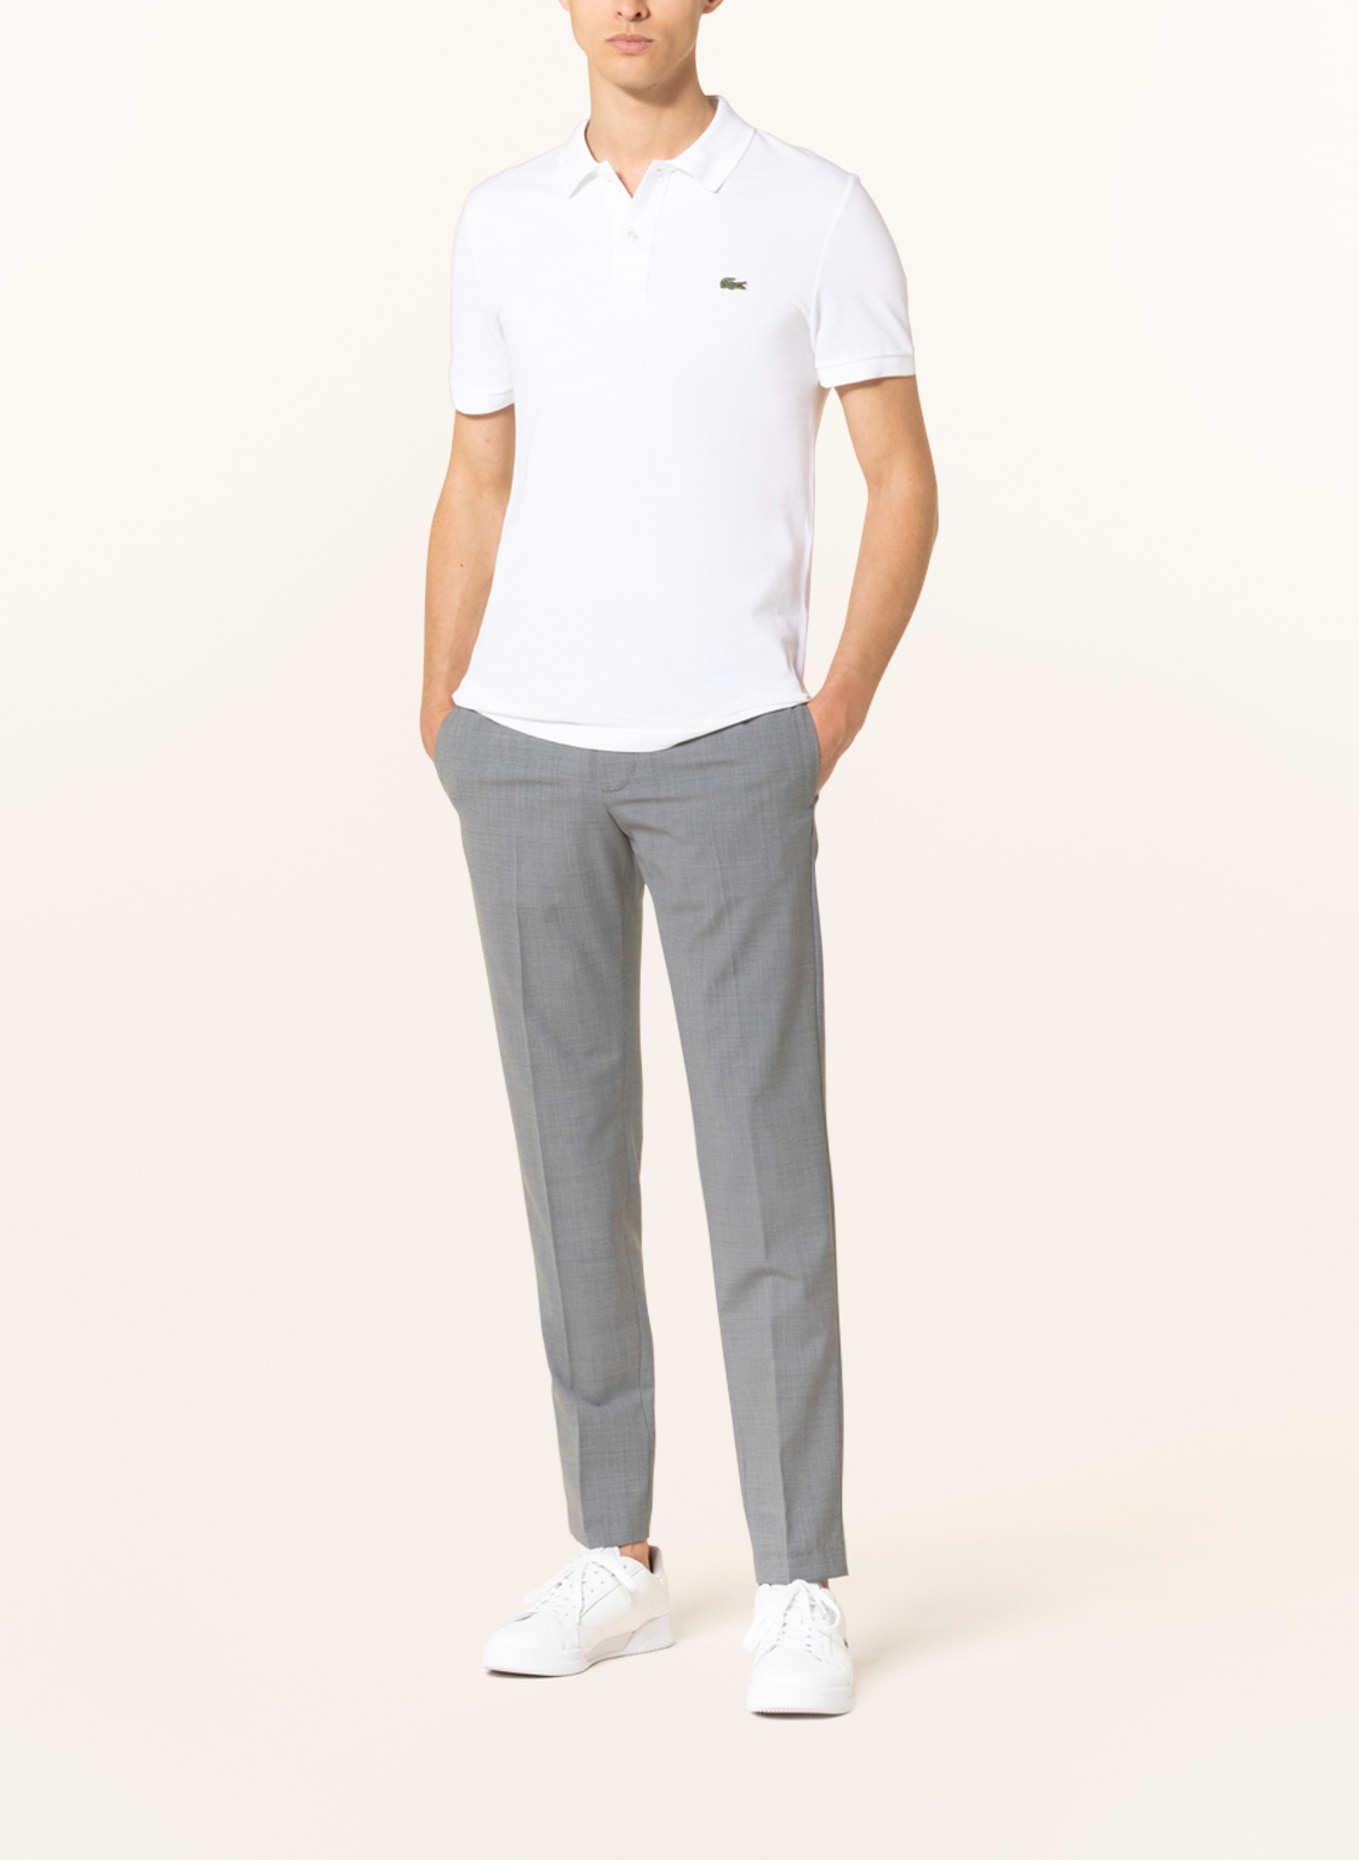 LACOSTE Piqué-Poloshirt Slim Fit, Farbe: WEISS (Bild 2)